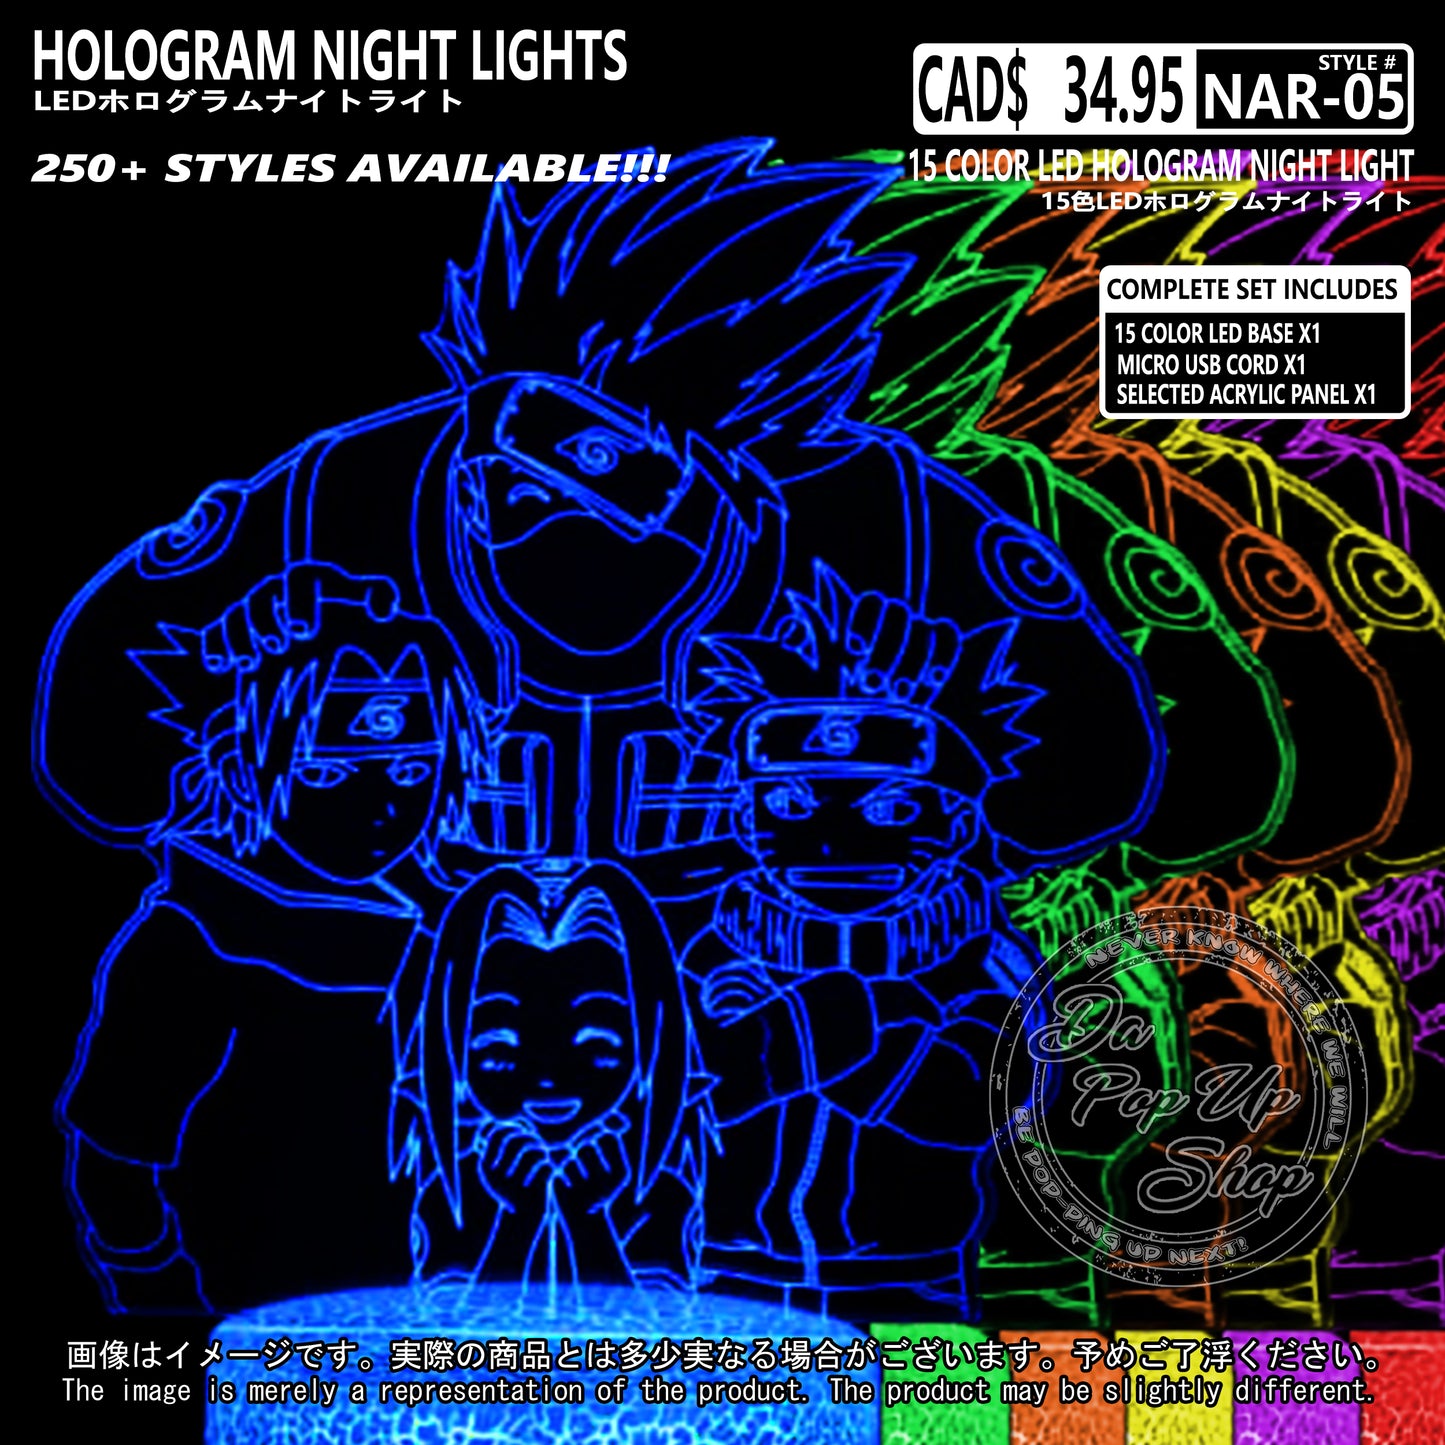 (NAR-05) Naruto Hologram LED Night Light